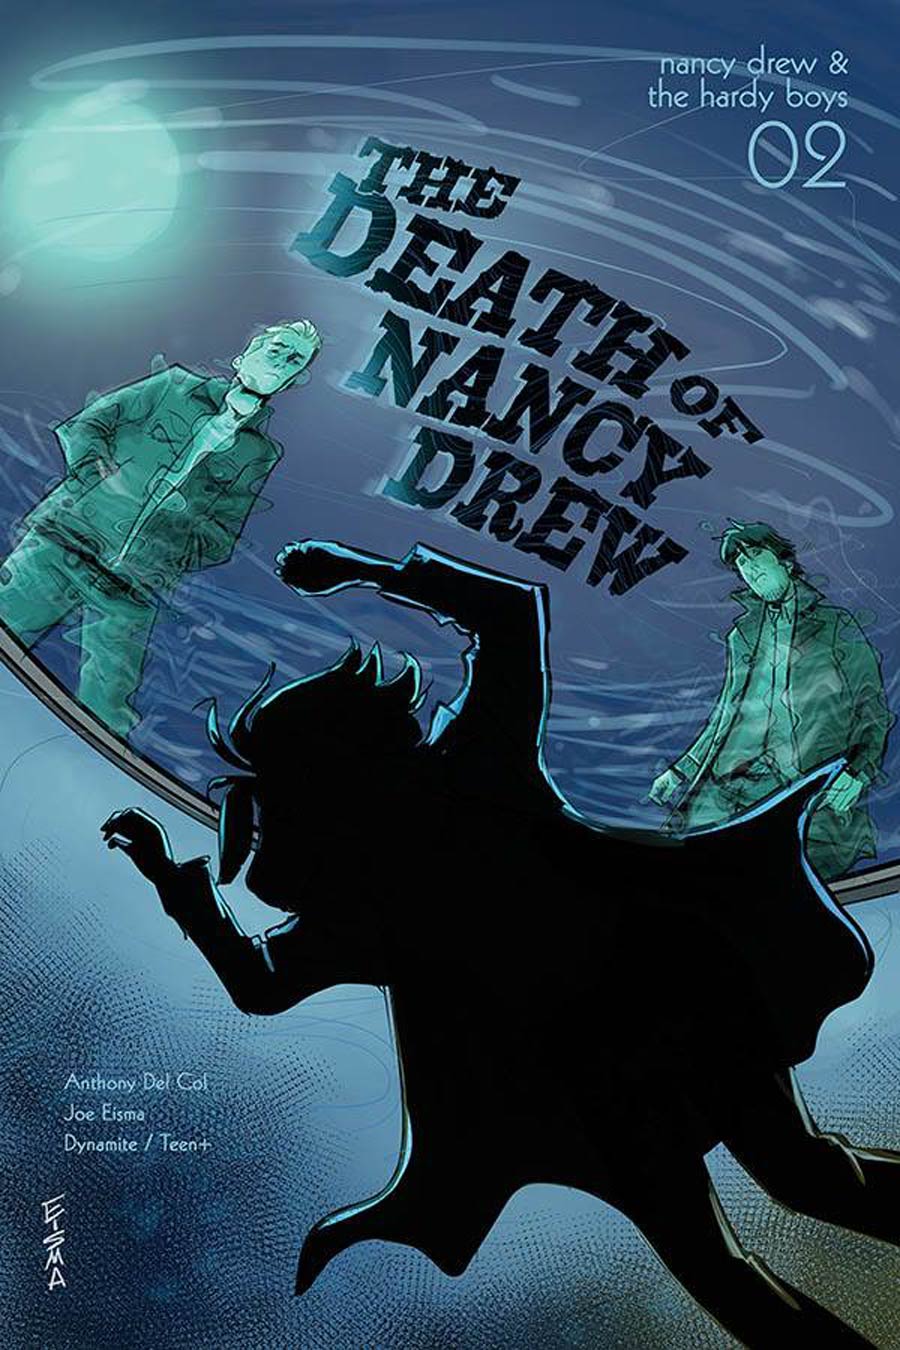 Nancy Drew And The Hardy Boys Death Of Nancy Drew #2 Cover A Regular Joe Eisma Cover